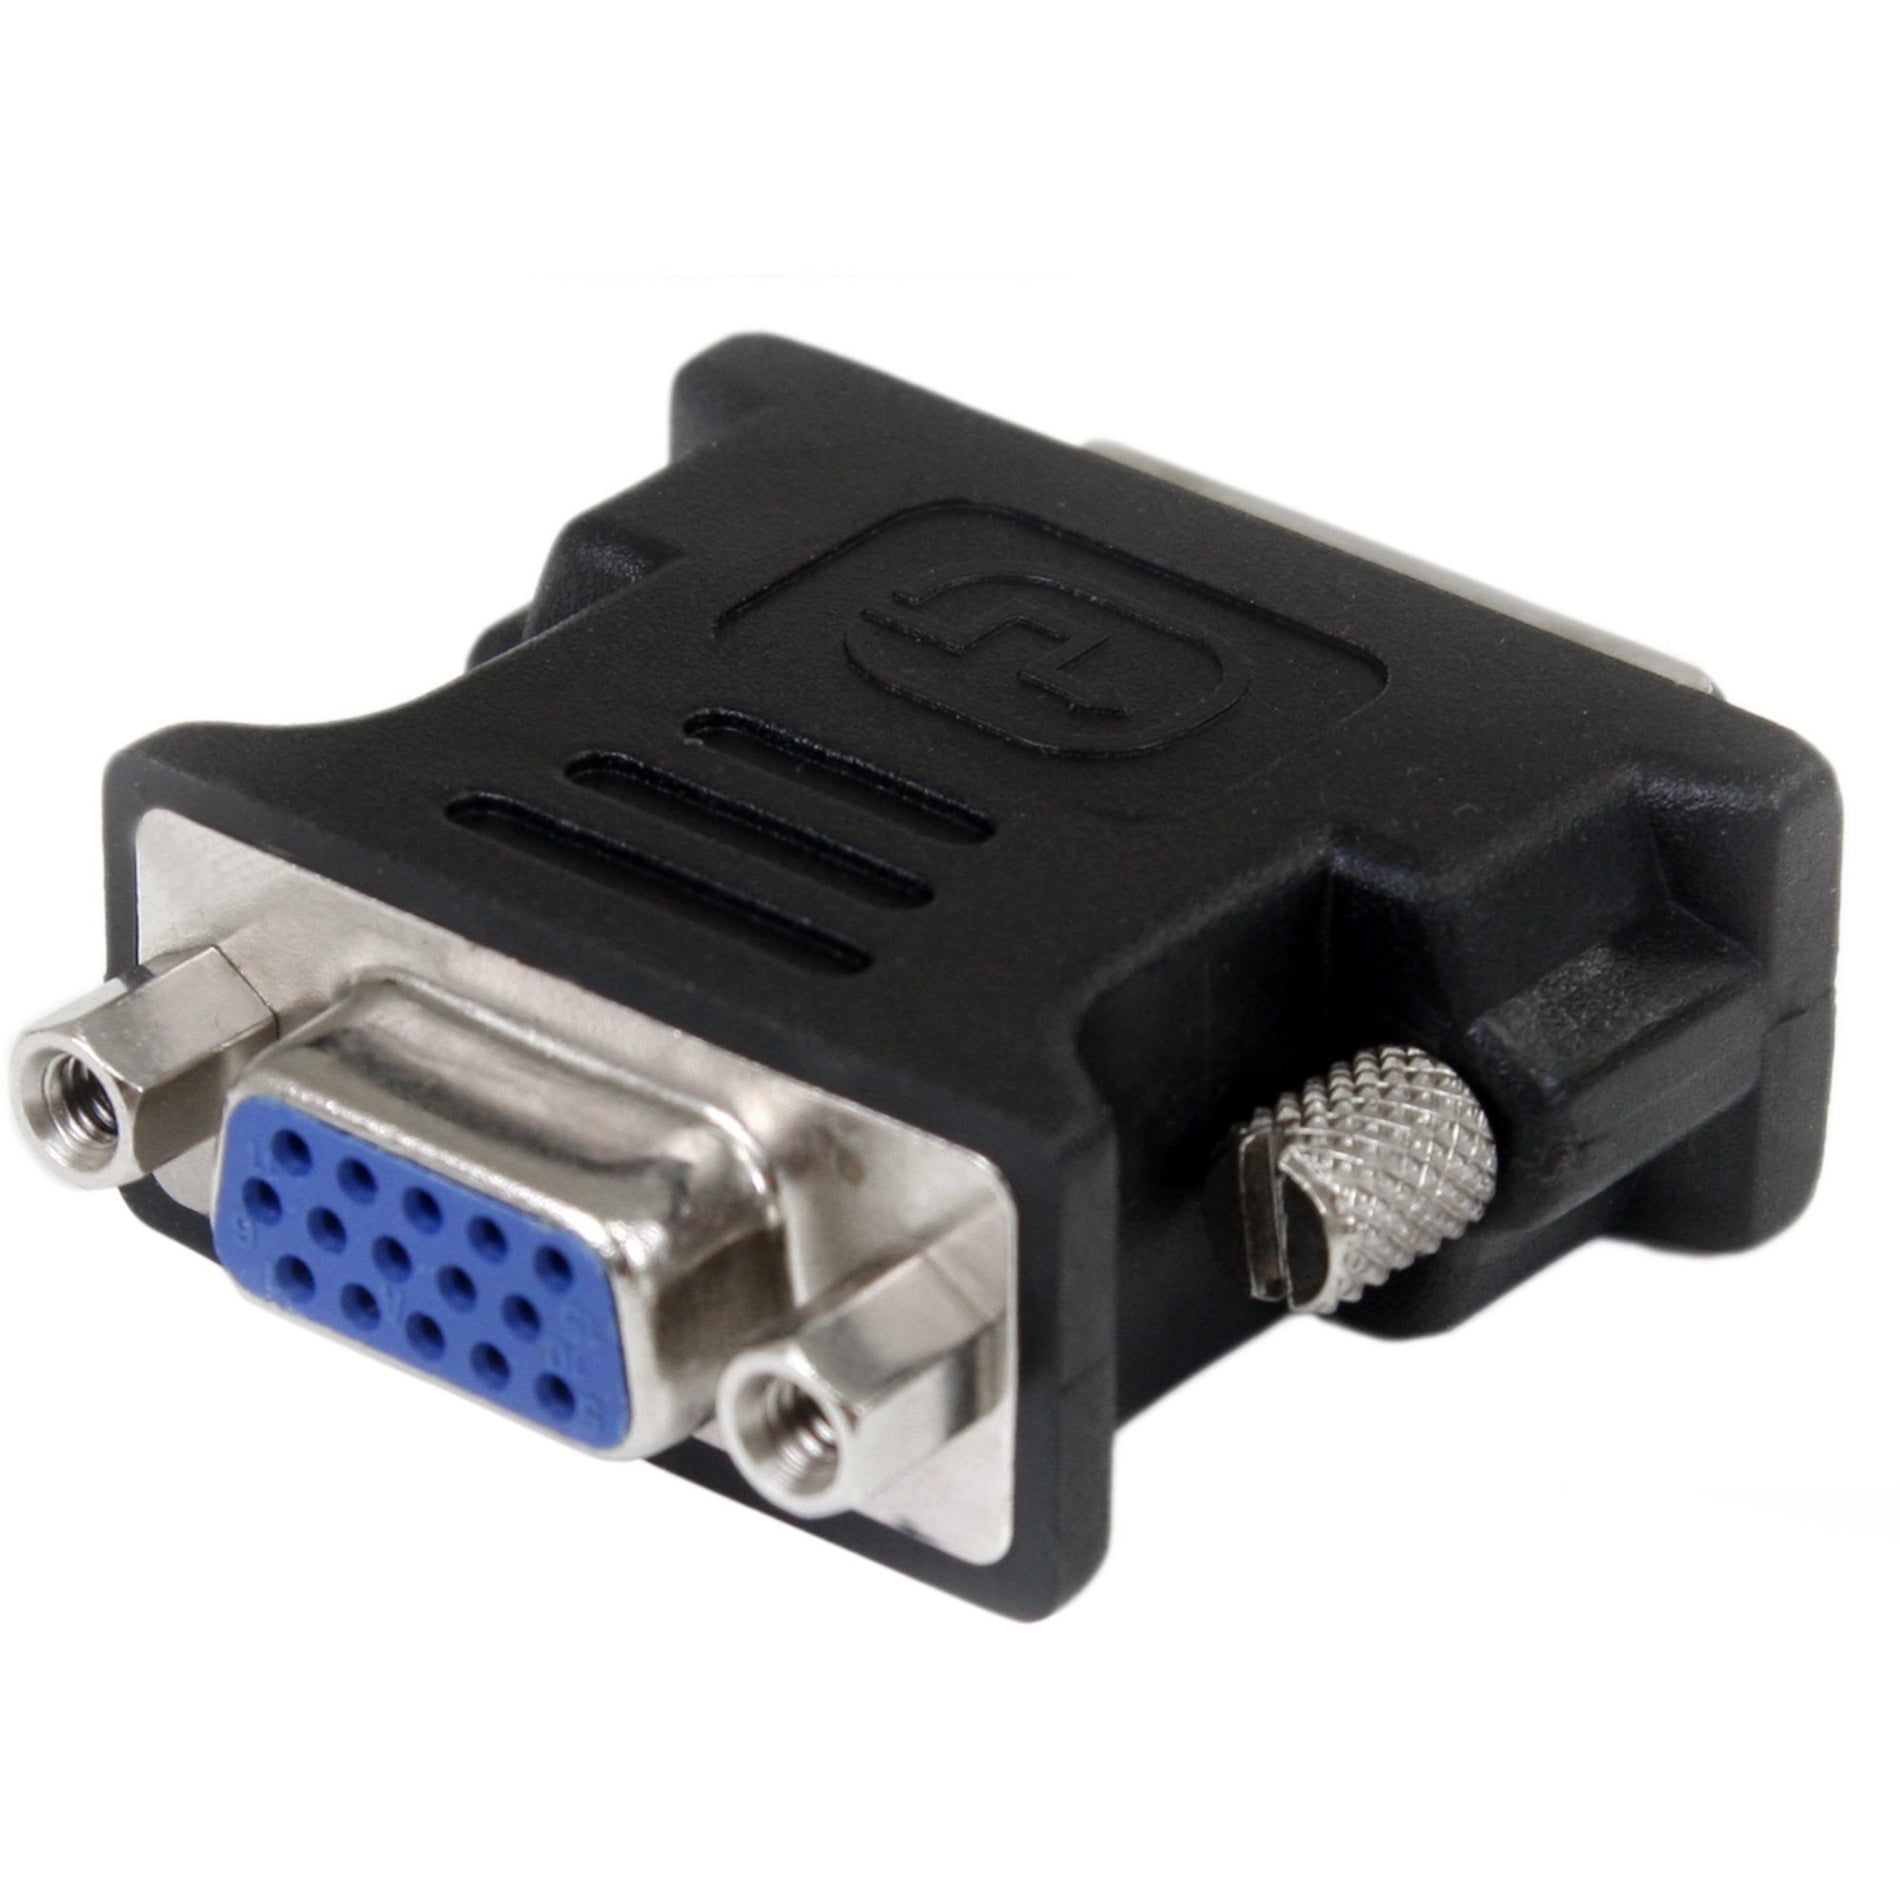 StarTech.com DVIVGAMFBK DVI to VGA Cable Adapter - Black - M/F, Molded, Screw Lock